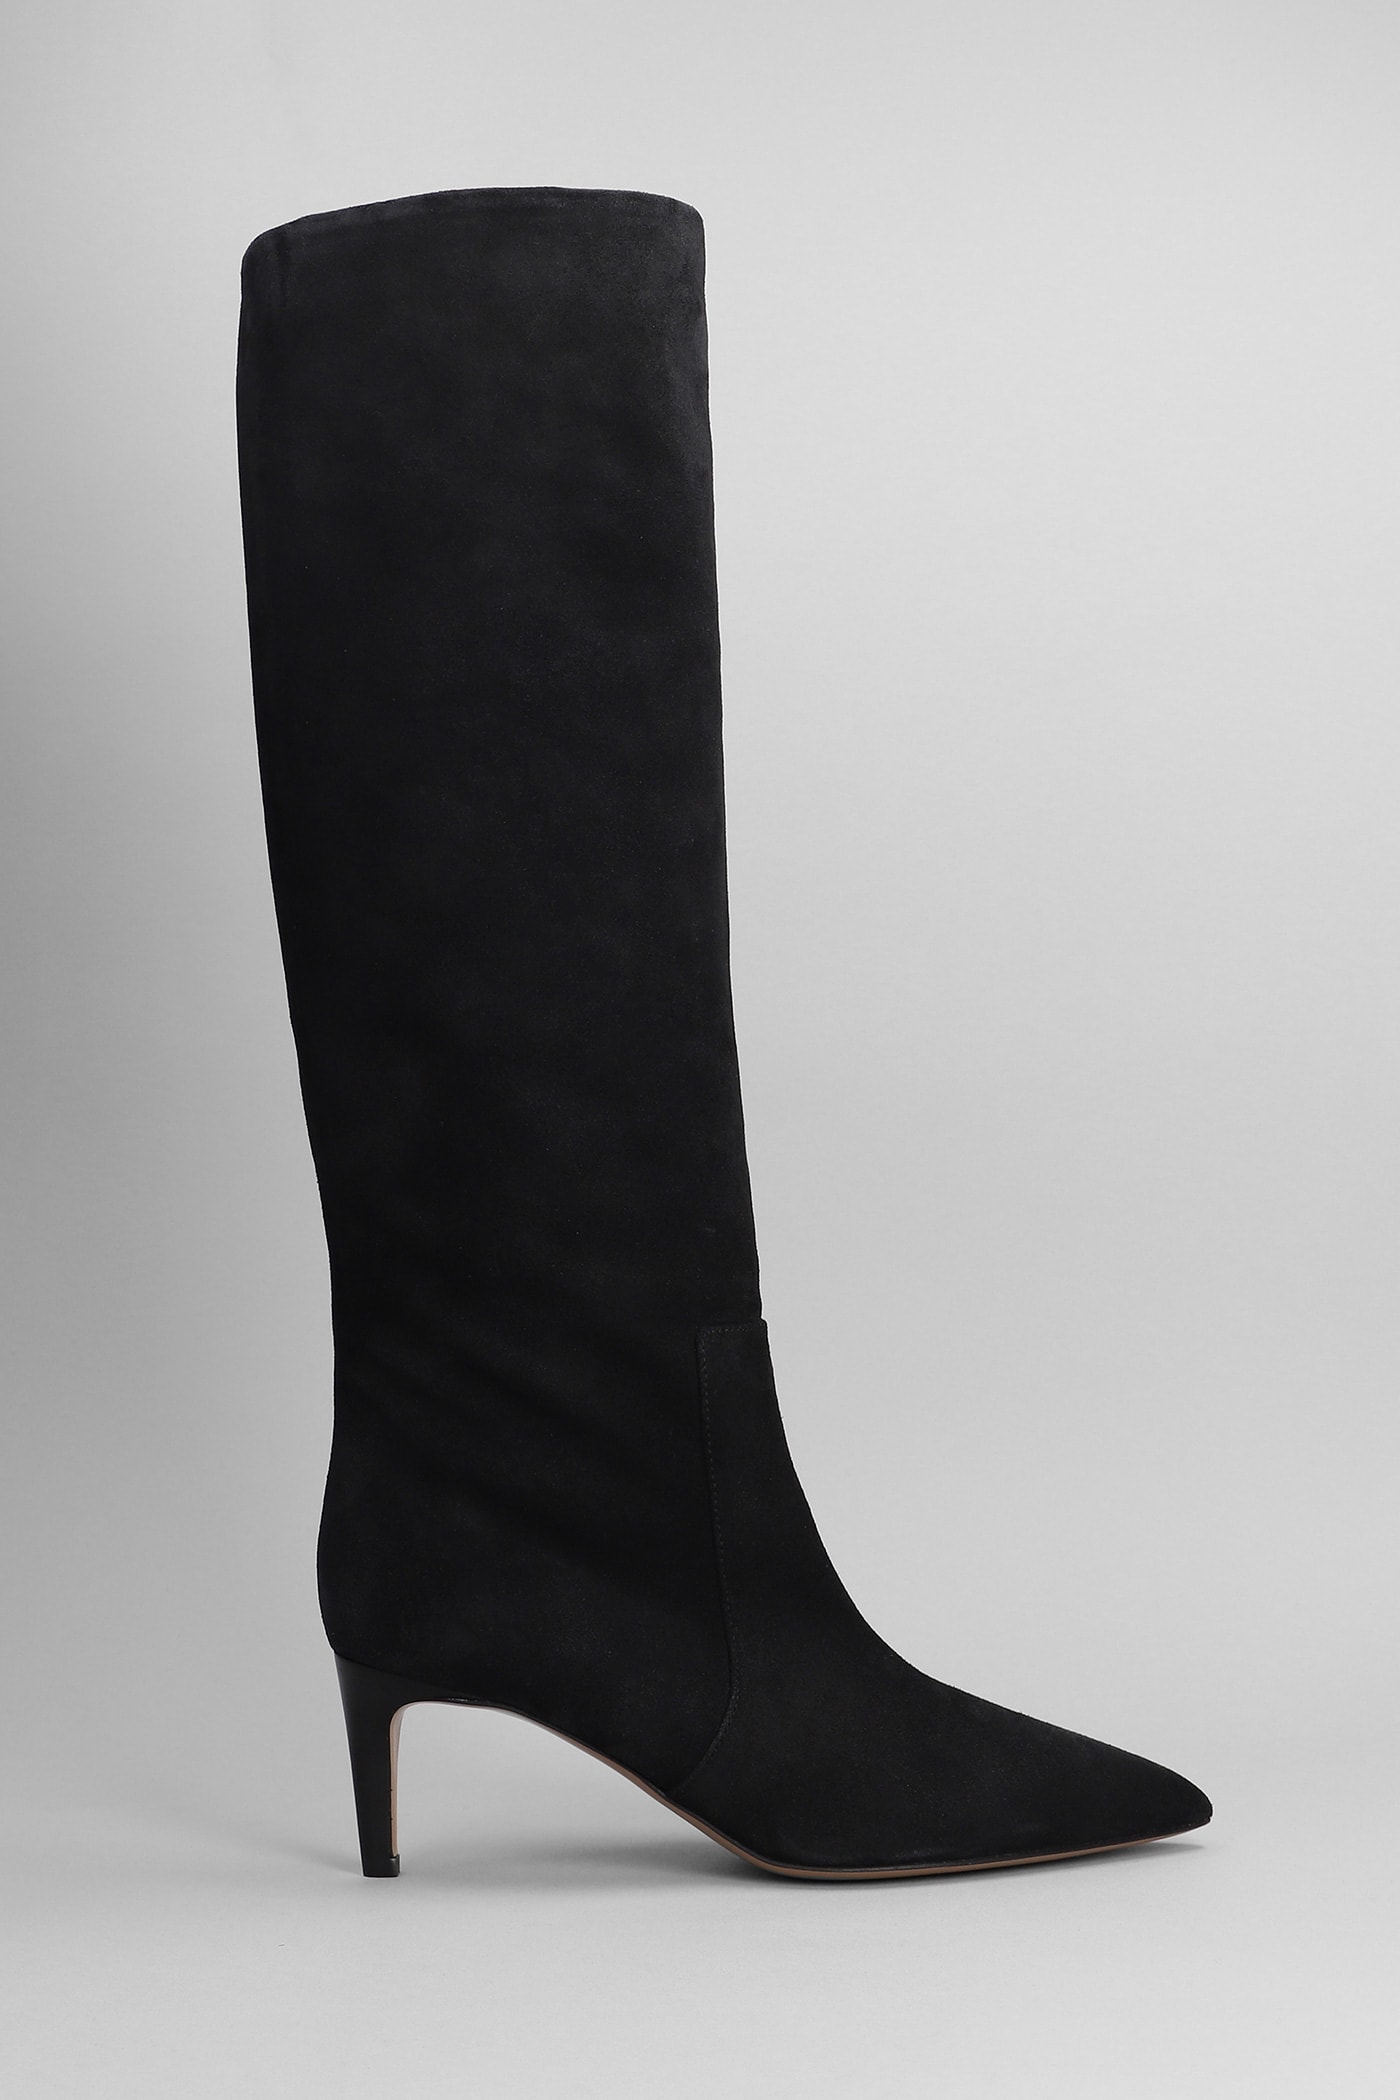 Paris Texas High Heels Boots In Black Suede